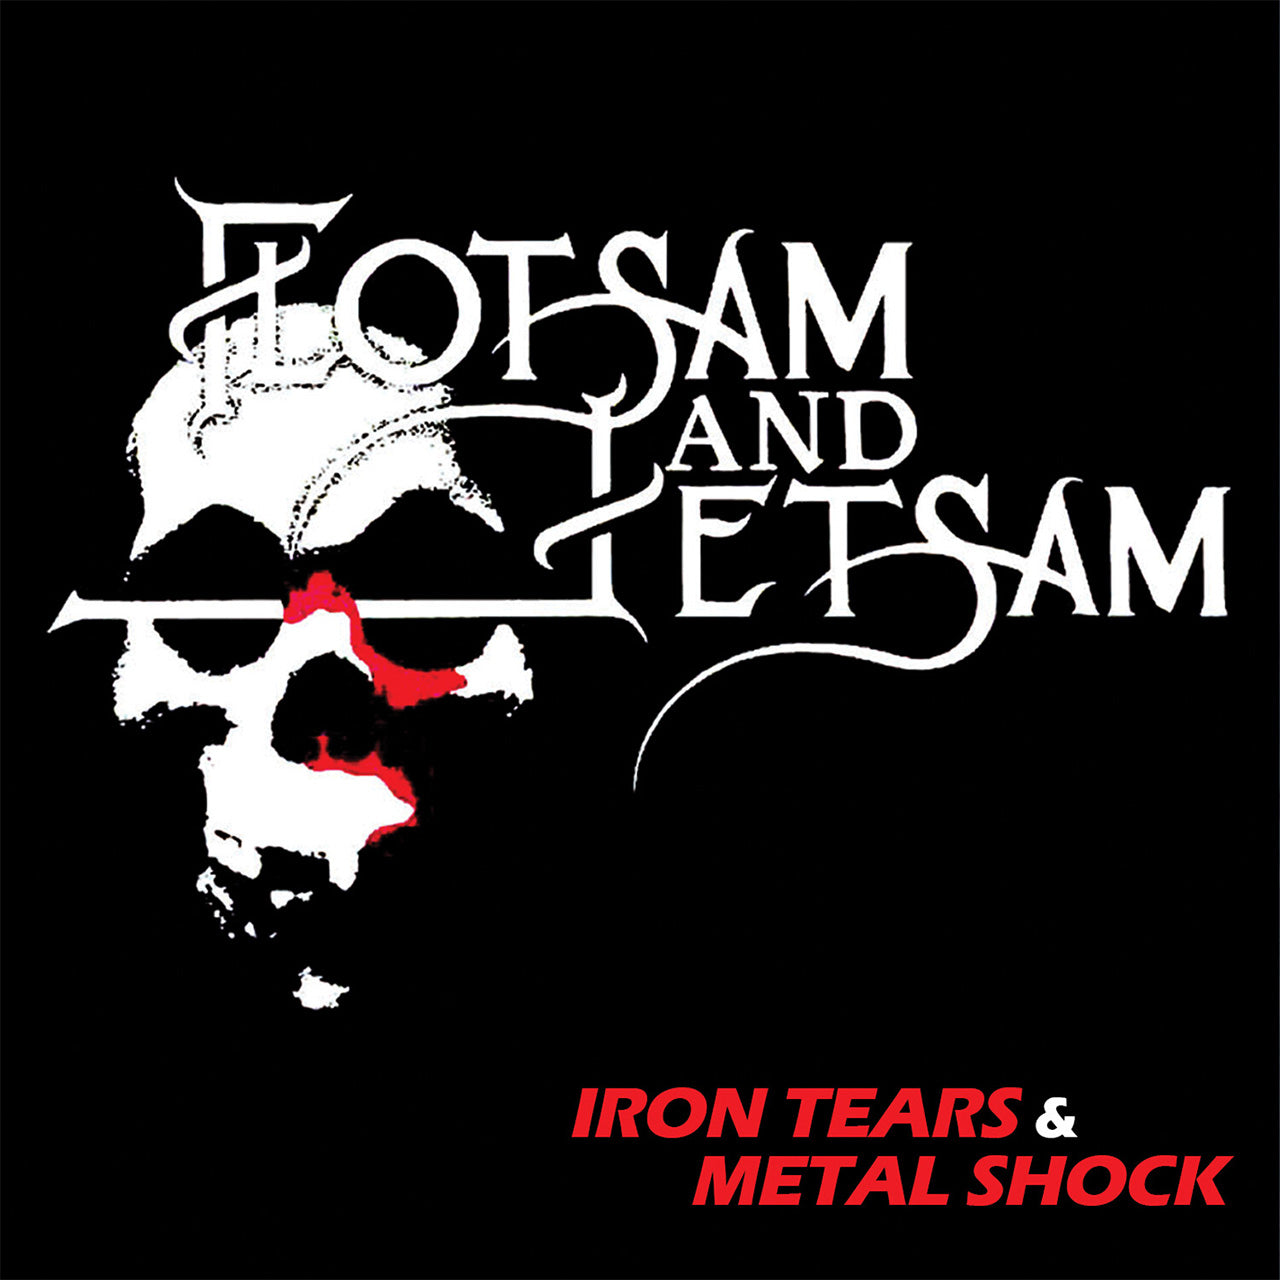 Flotsam and Jetsam - Iron Tears & Metal Shock (CD)